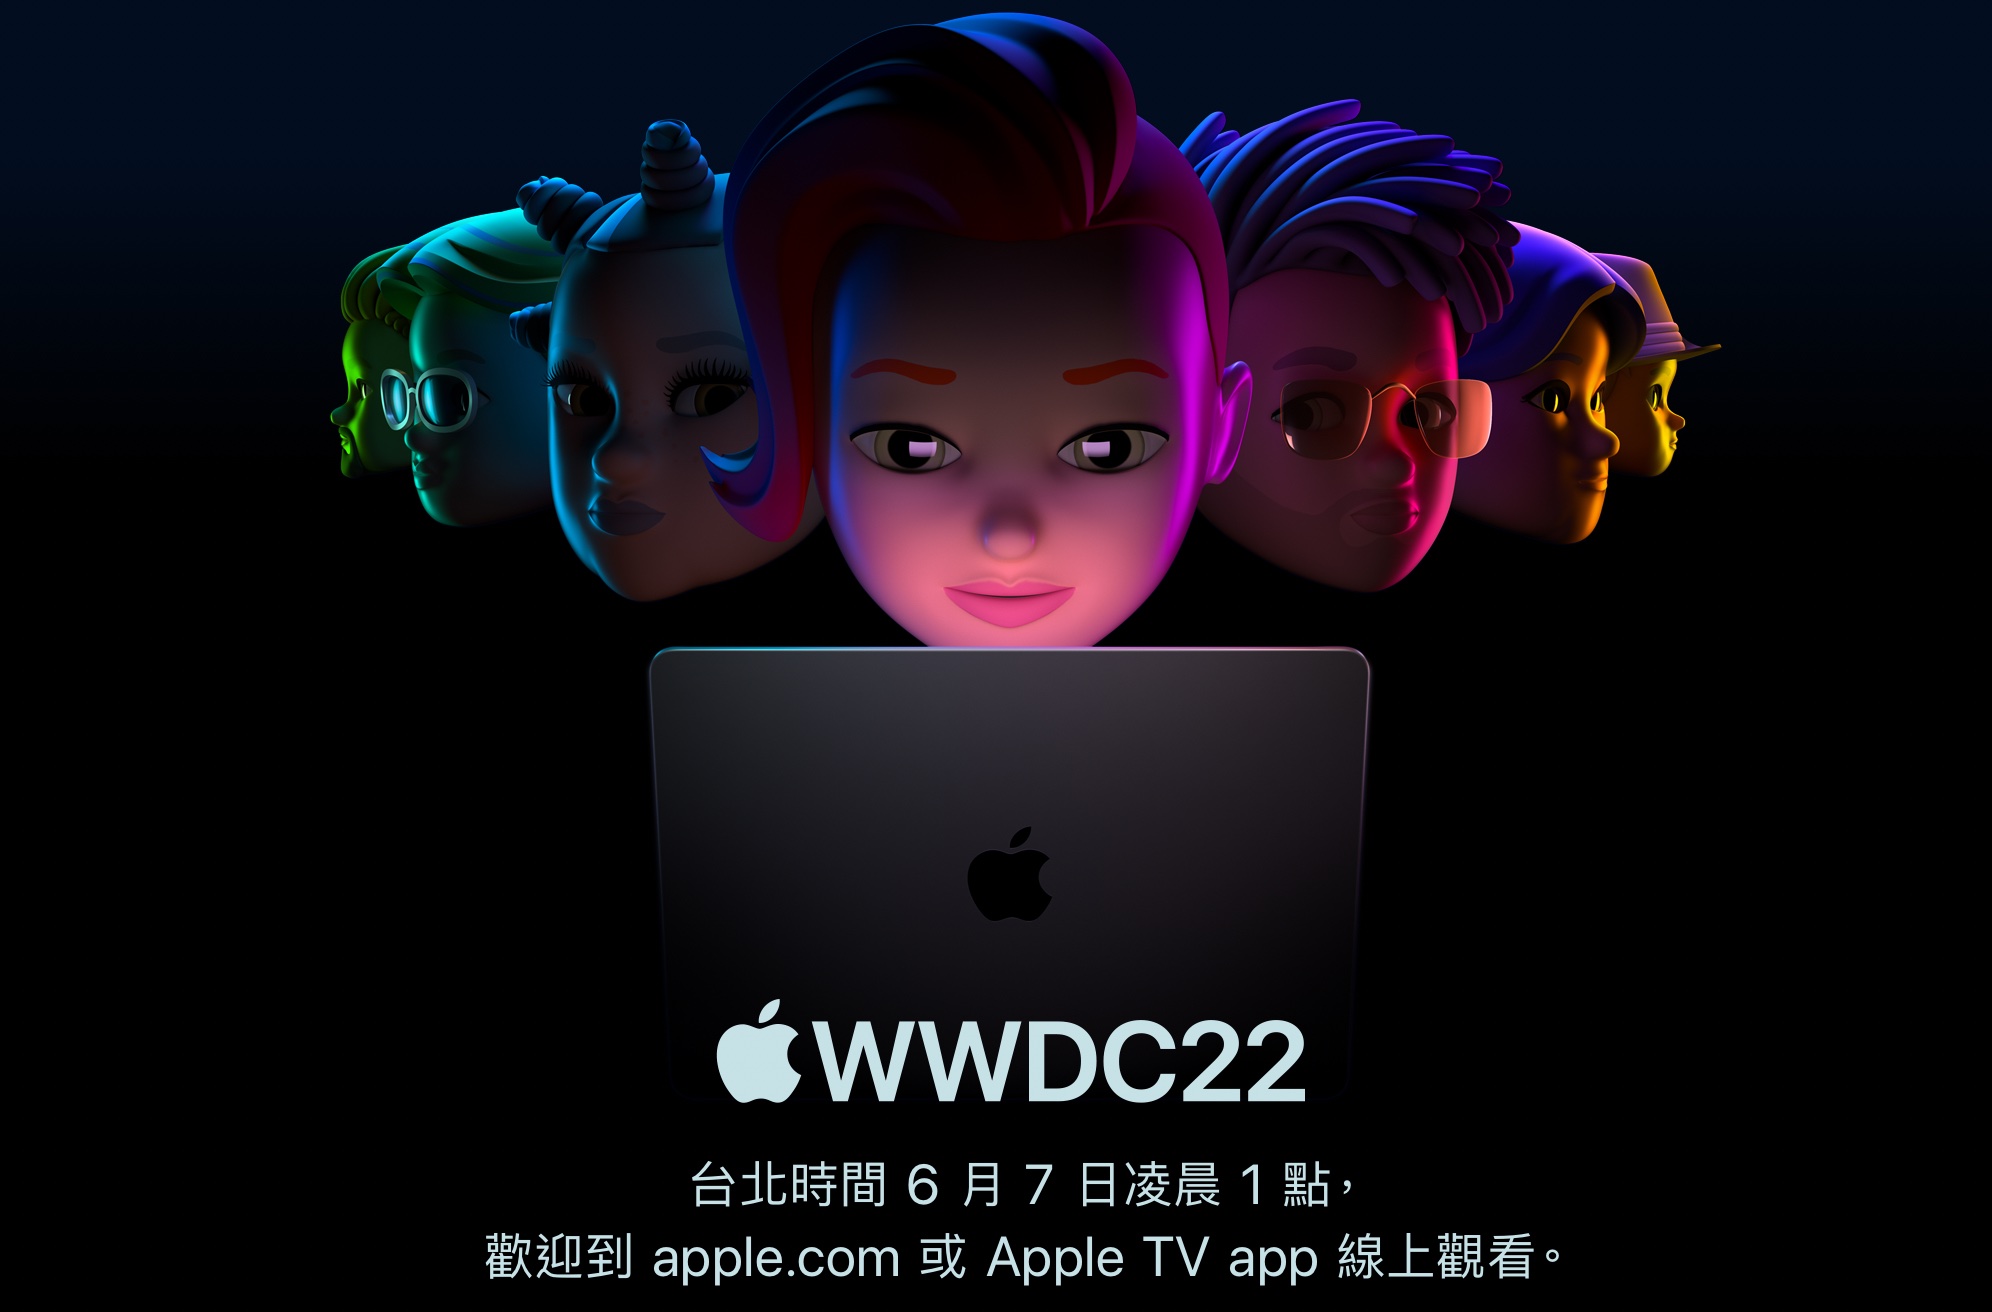 WWDC 2022 開發者大會